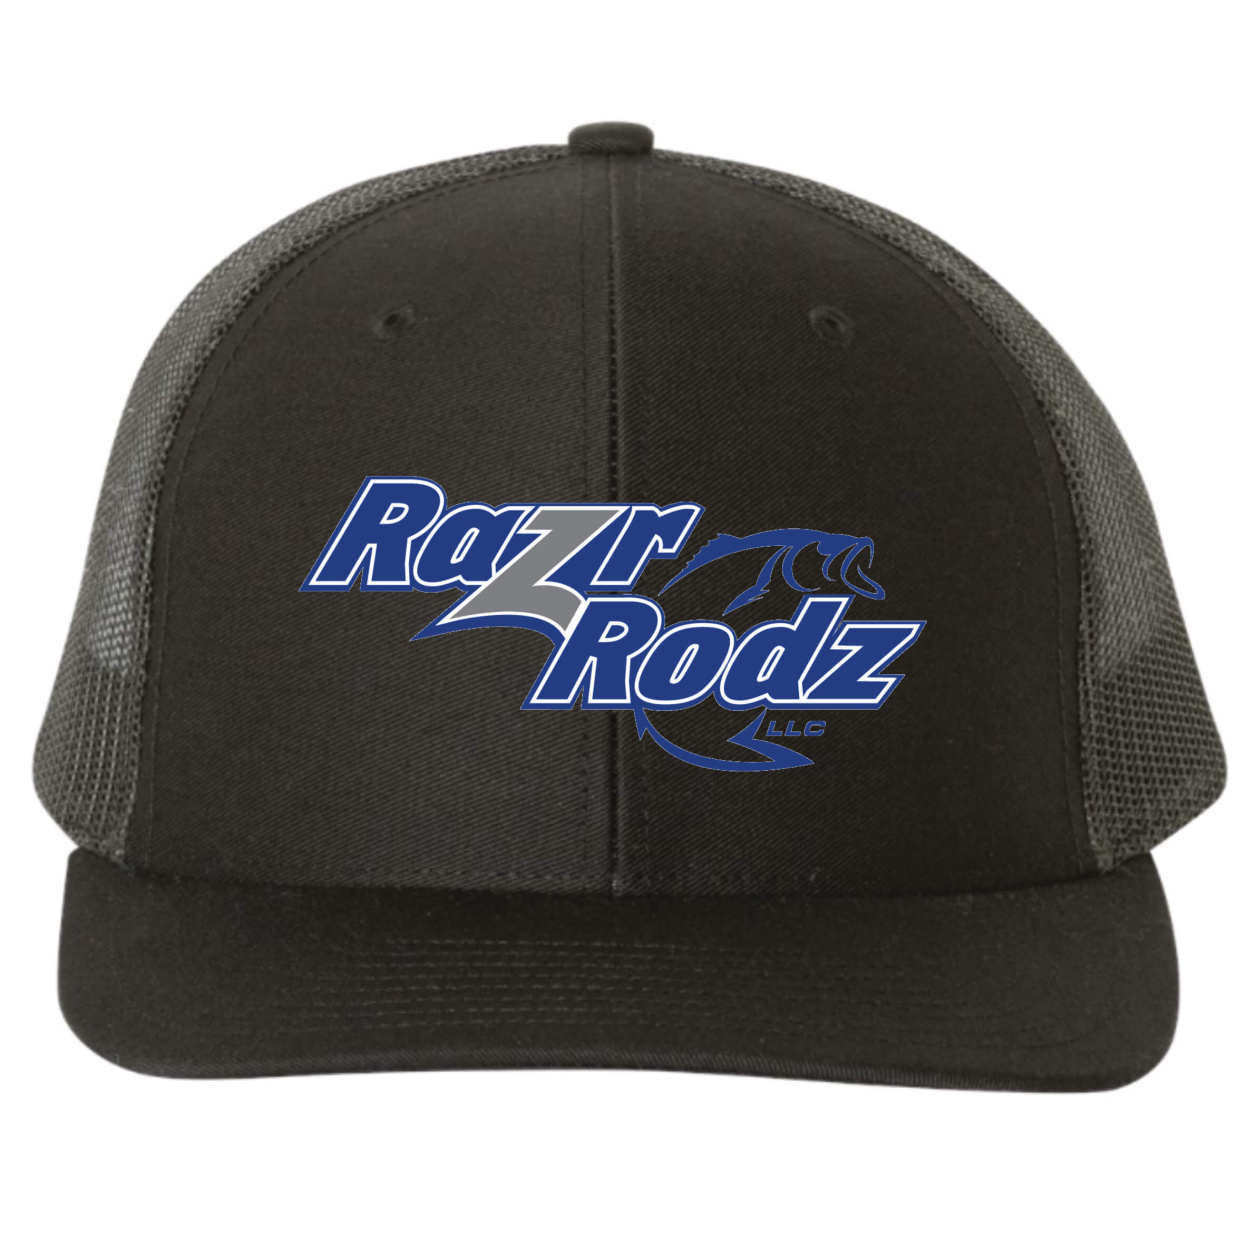 RAZR - Original Trucker SnapBack Cap